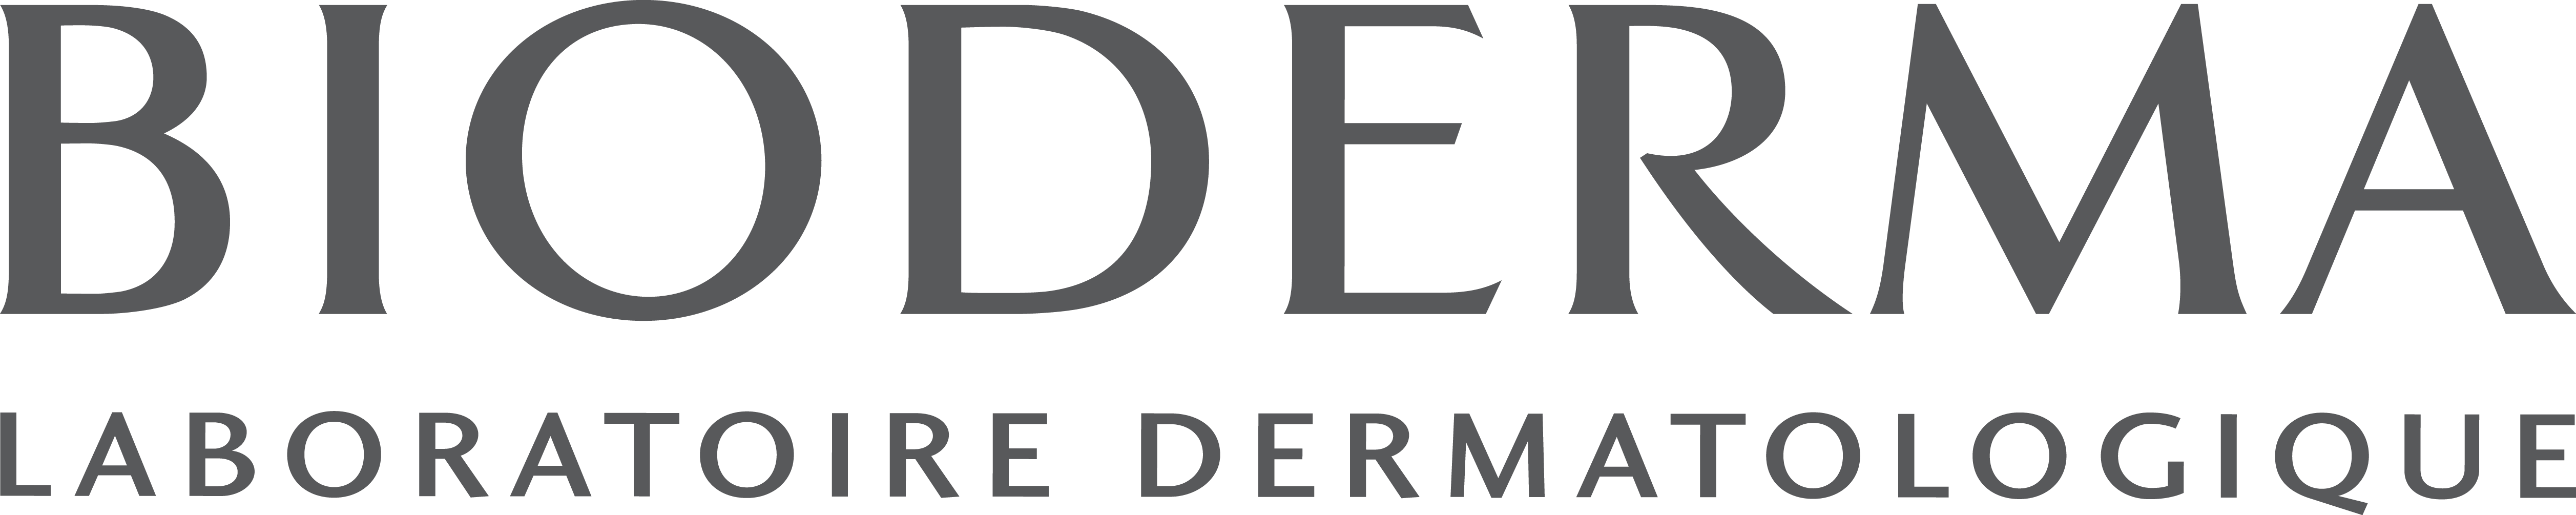 bioderma-logo